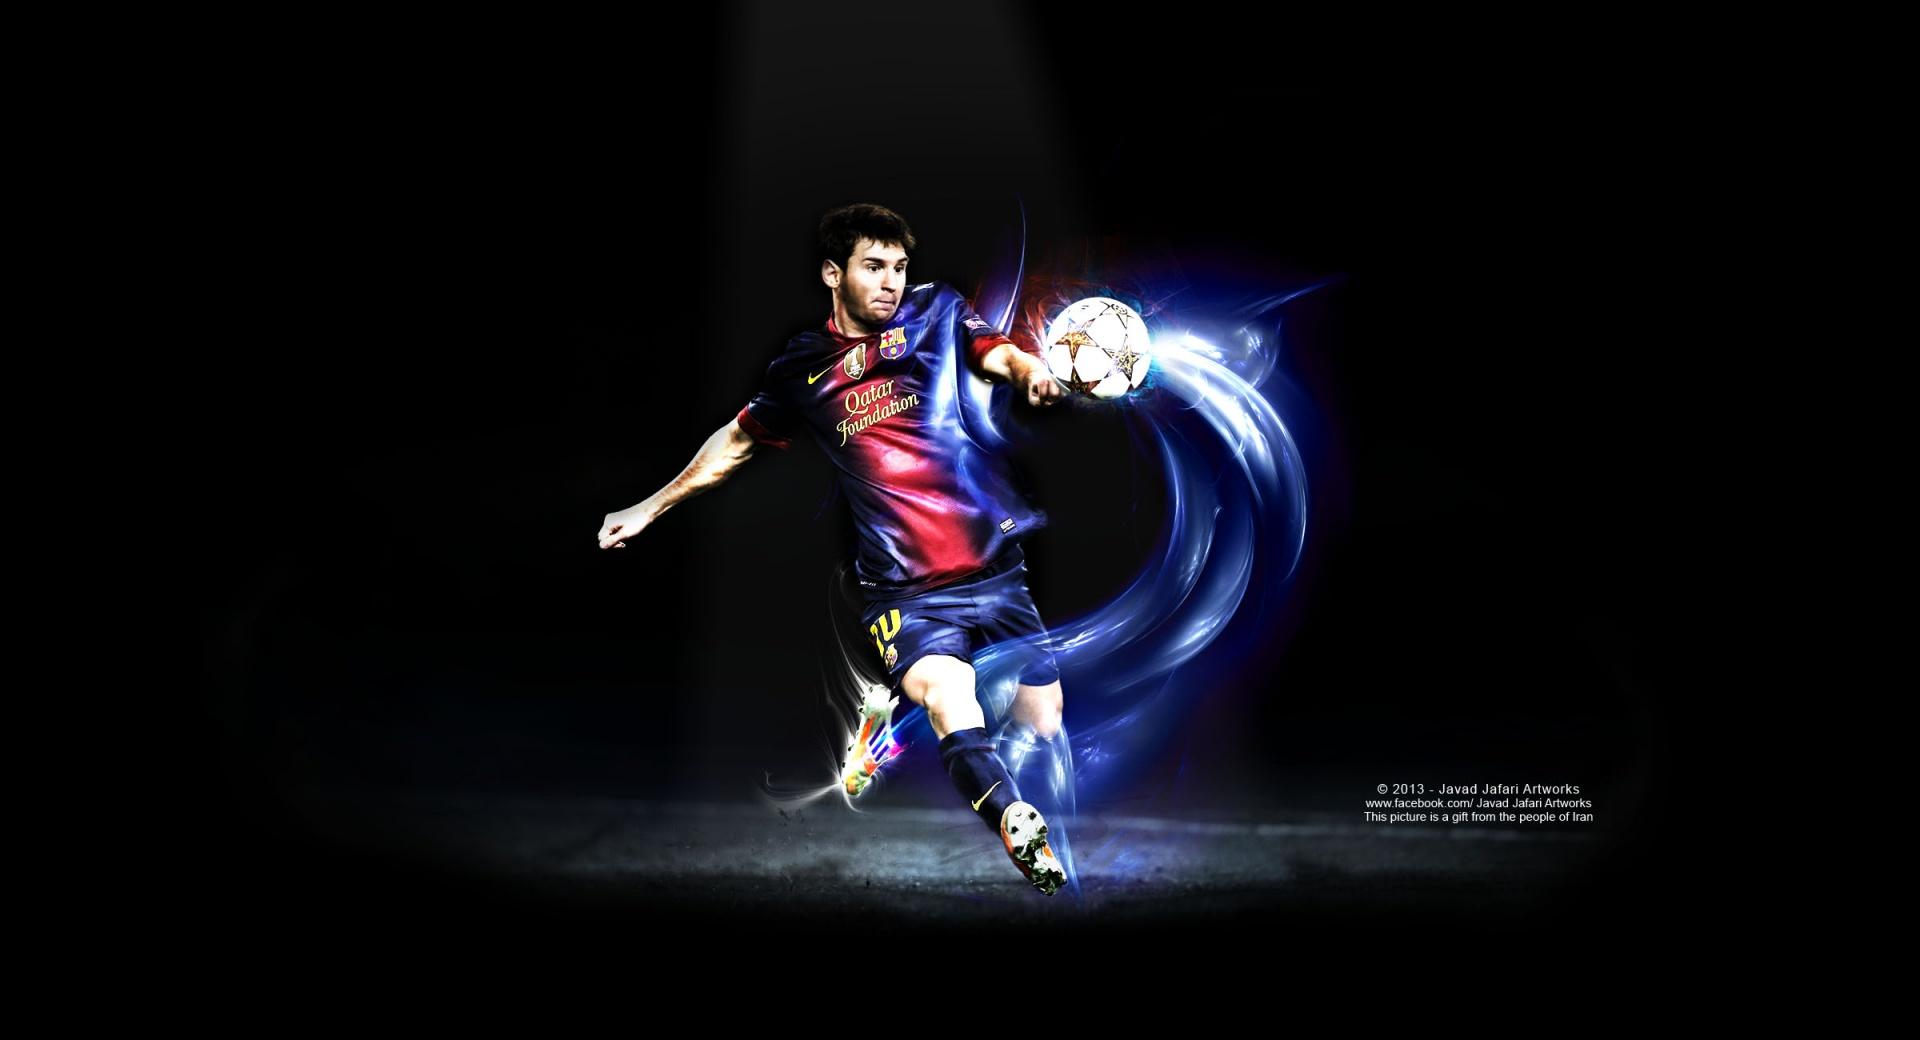 Messi Kick at 2048 x 2048 iPad size wallpapers HD quality